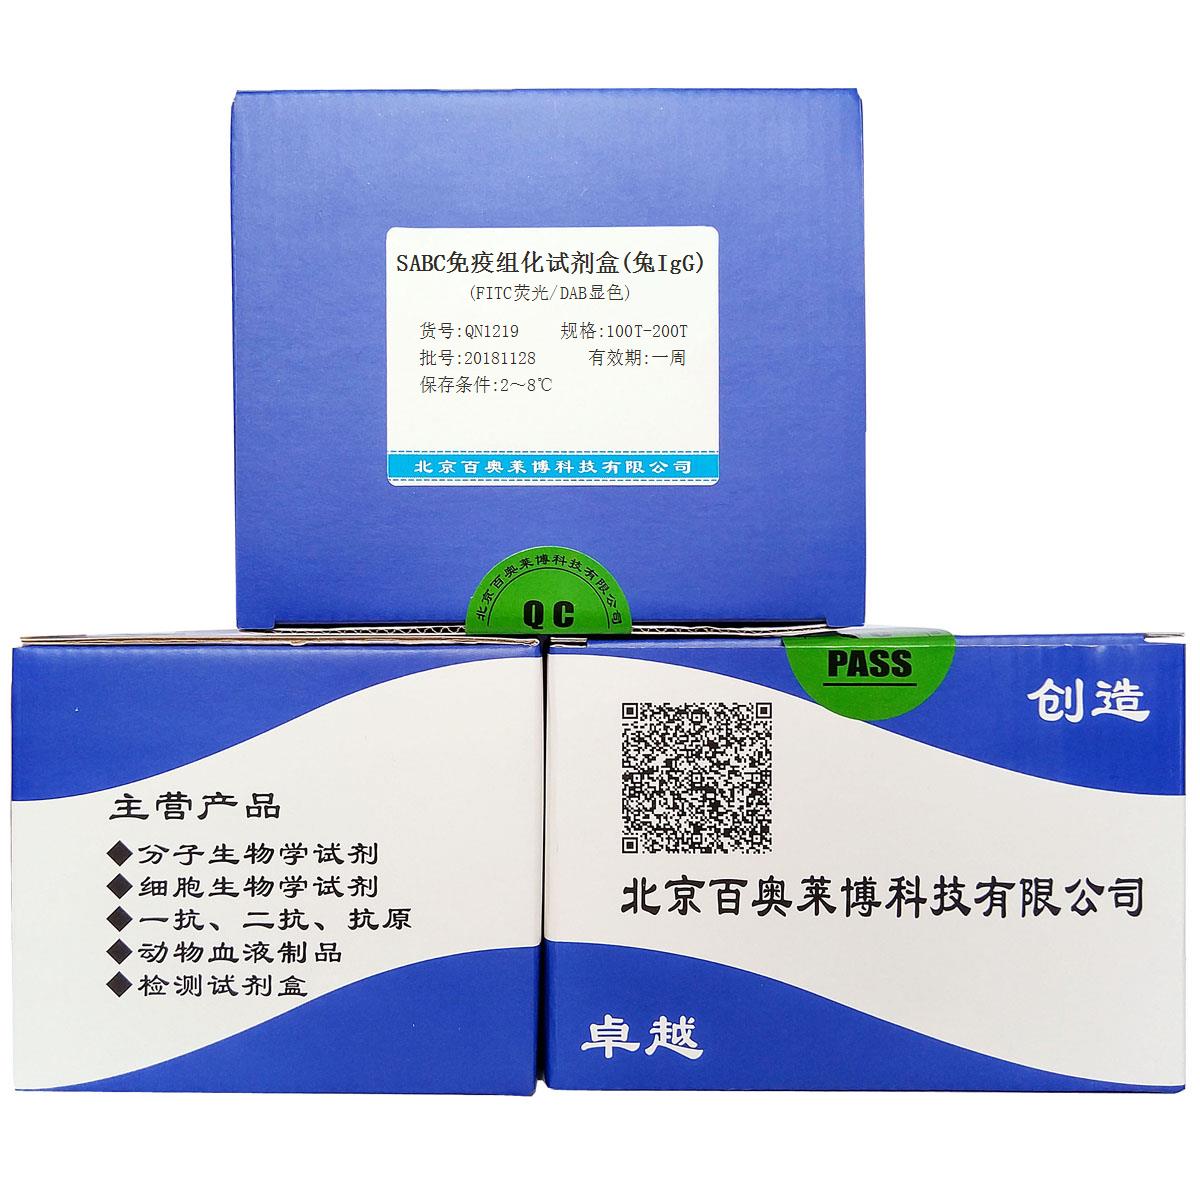 SABC免疫组化试剂盒(兔IgG)(FITC荧光/DAB显色)